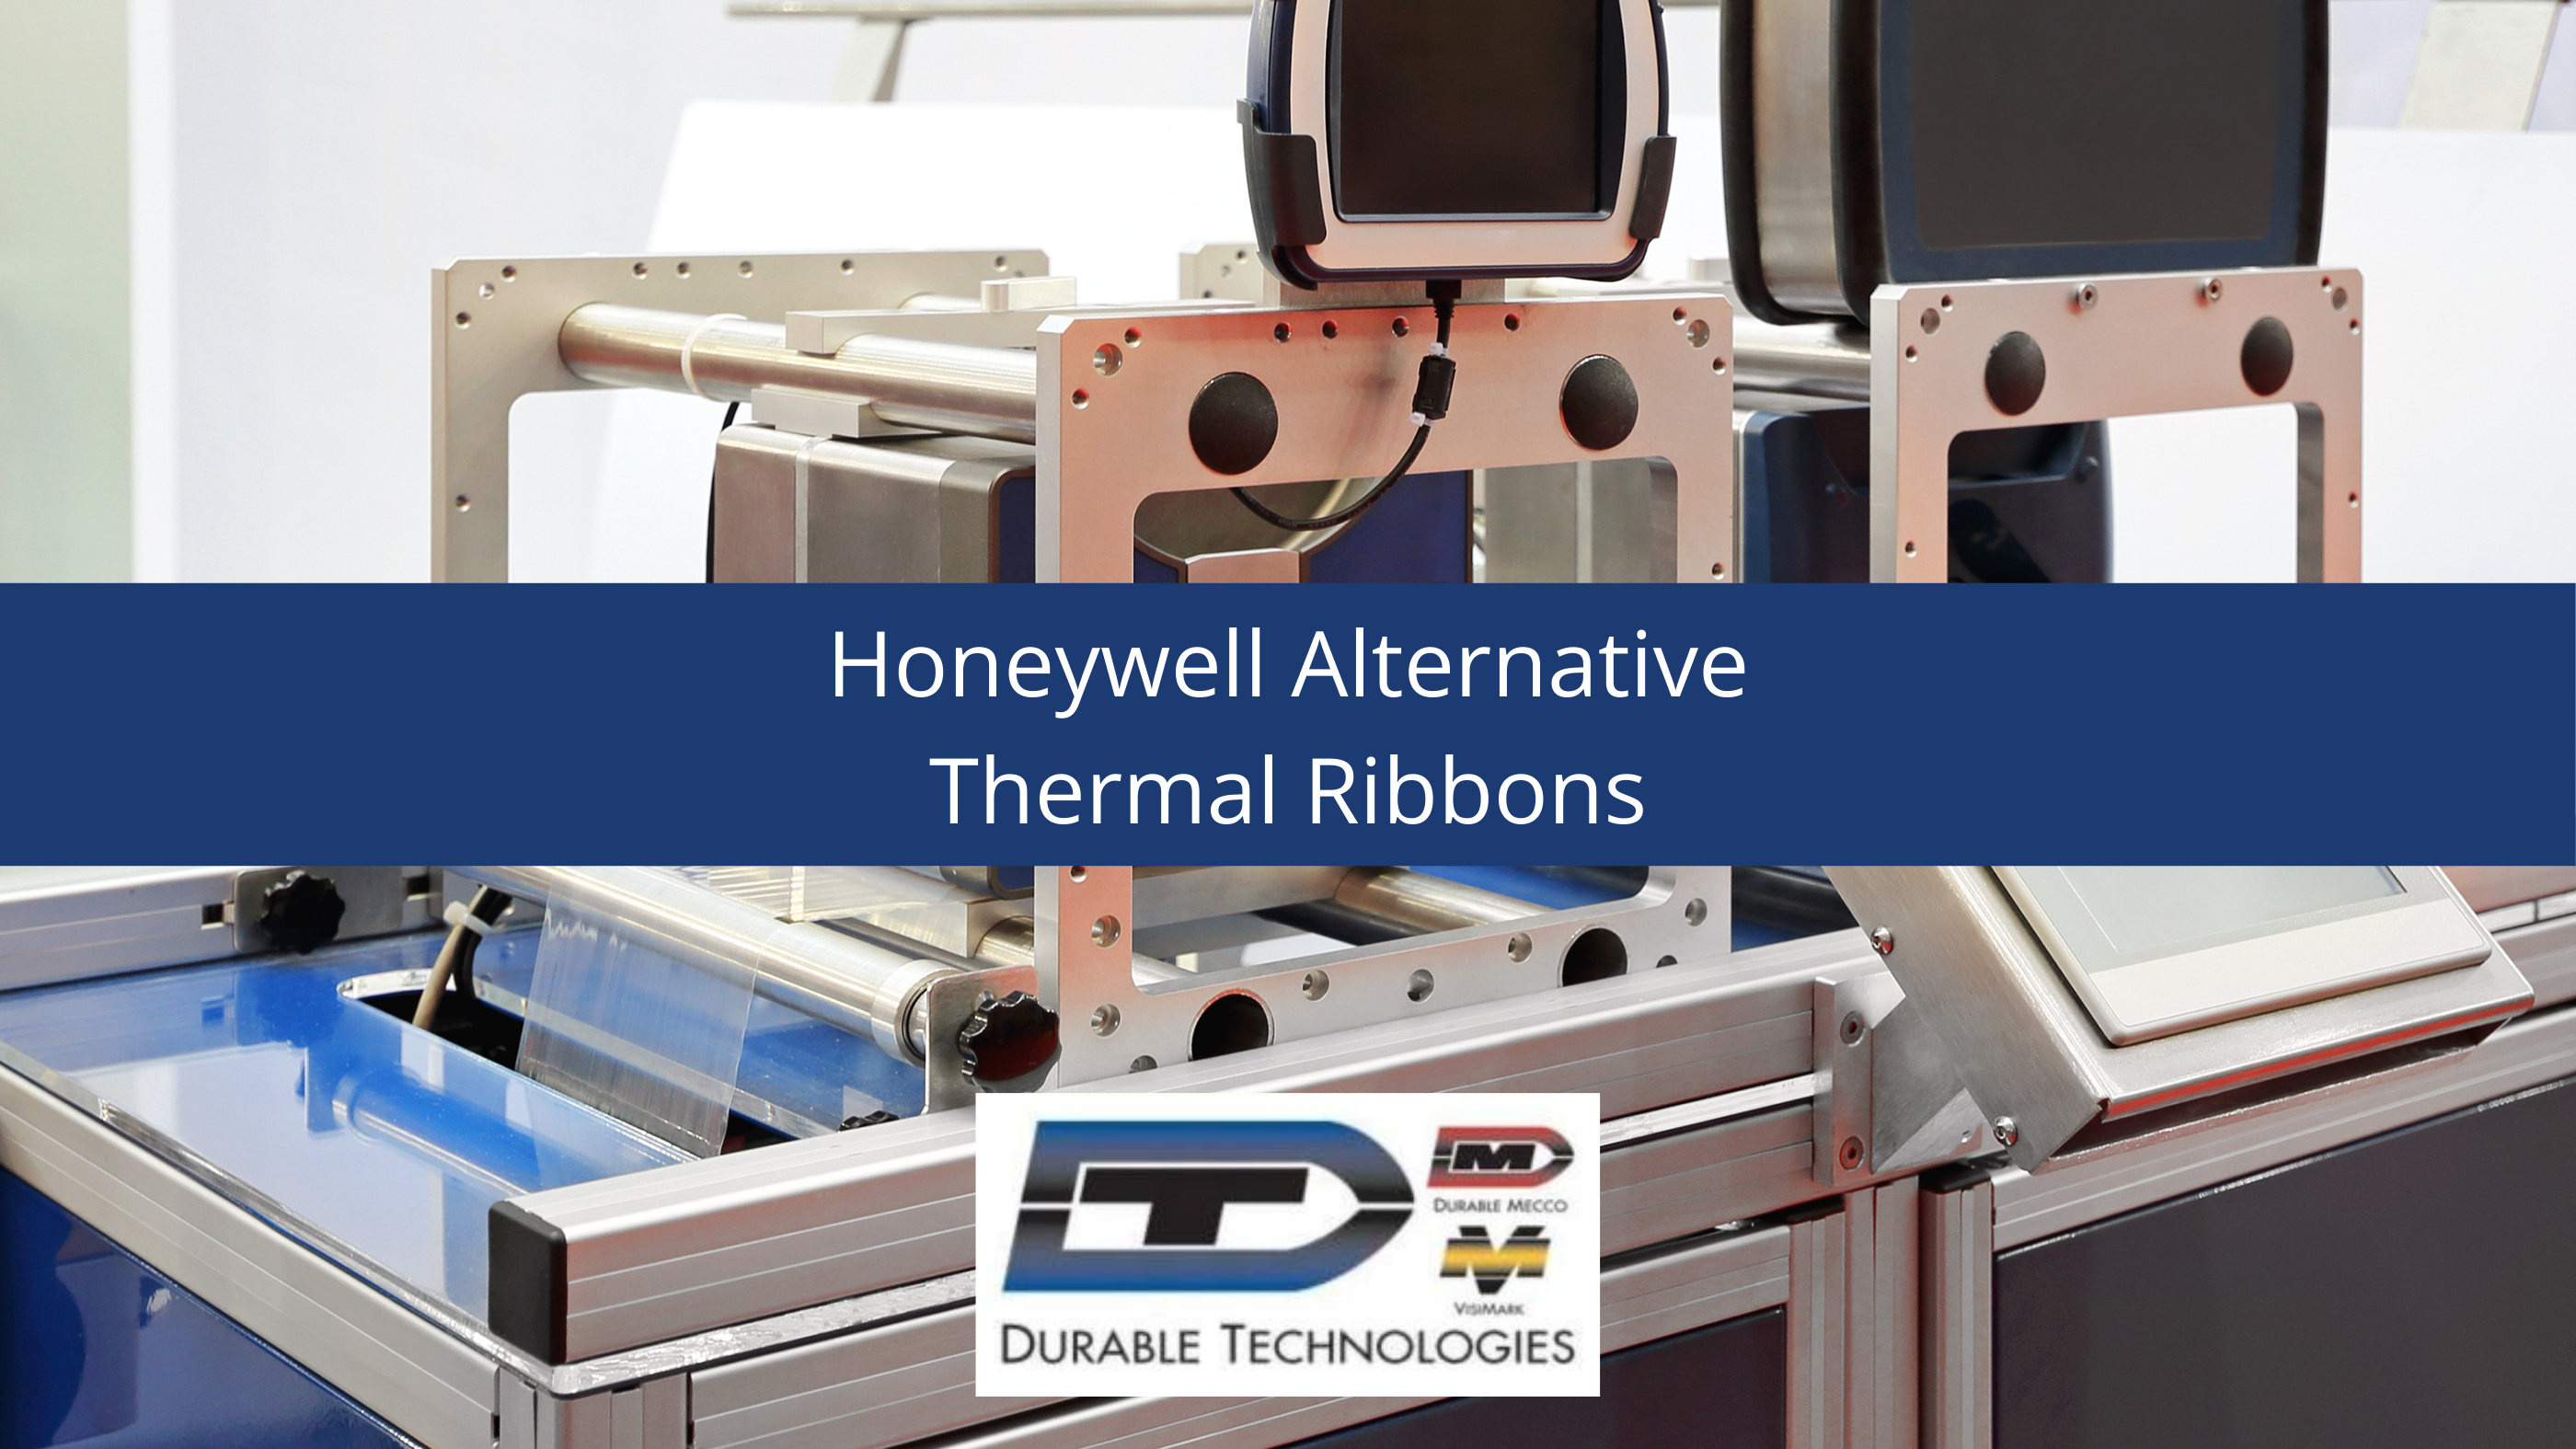 Honeywell Alternative Thermal Ribbons